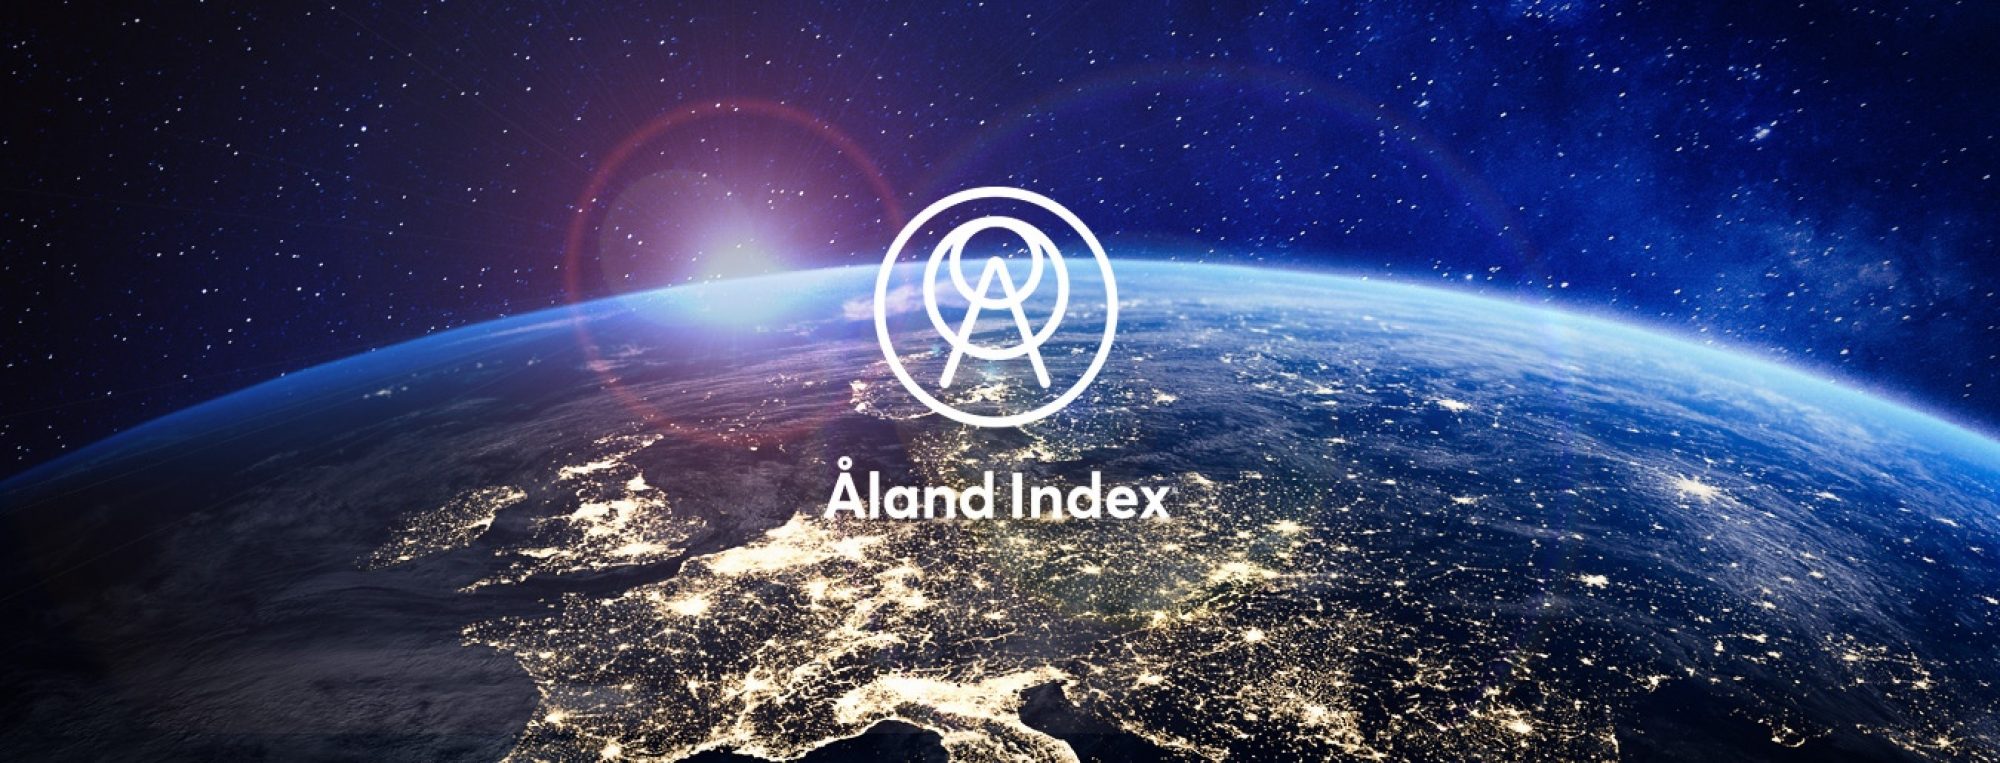 Blogg aland index logo rymden jorden belysning land